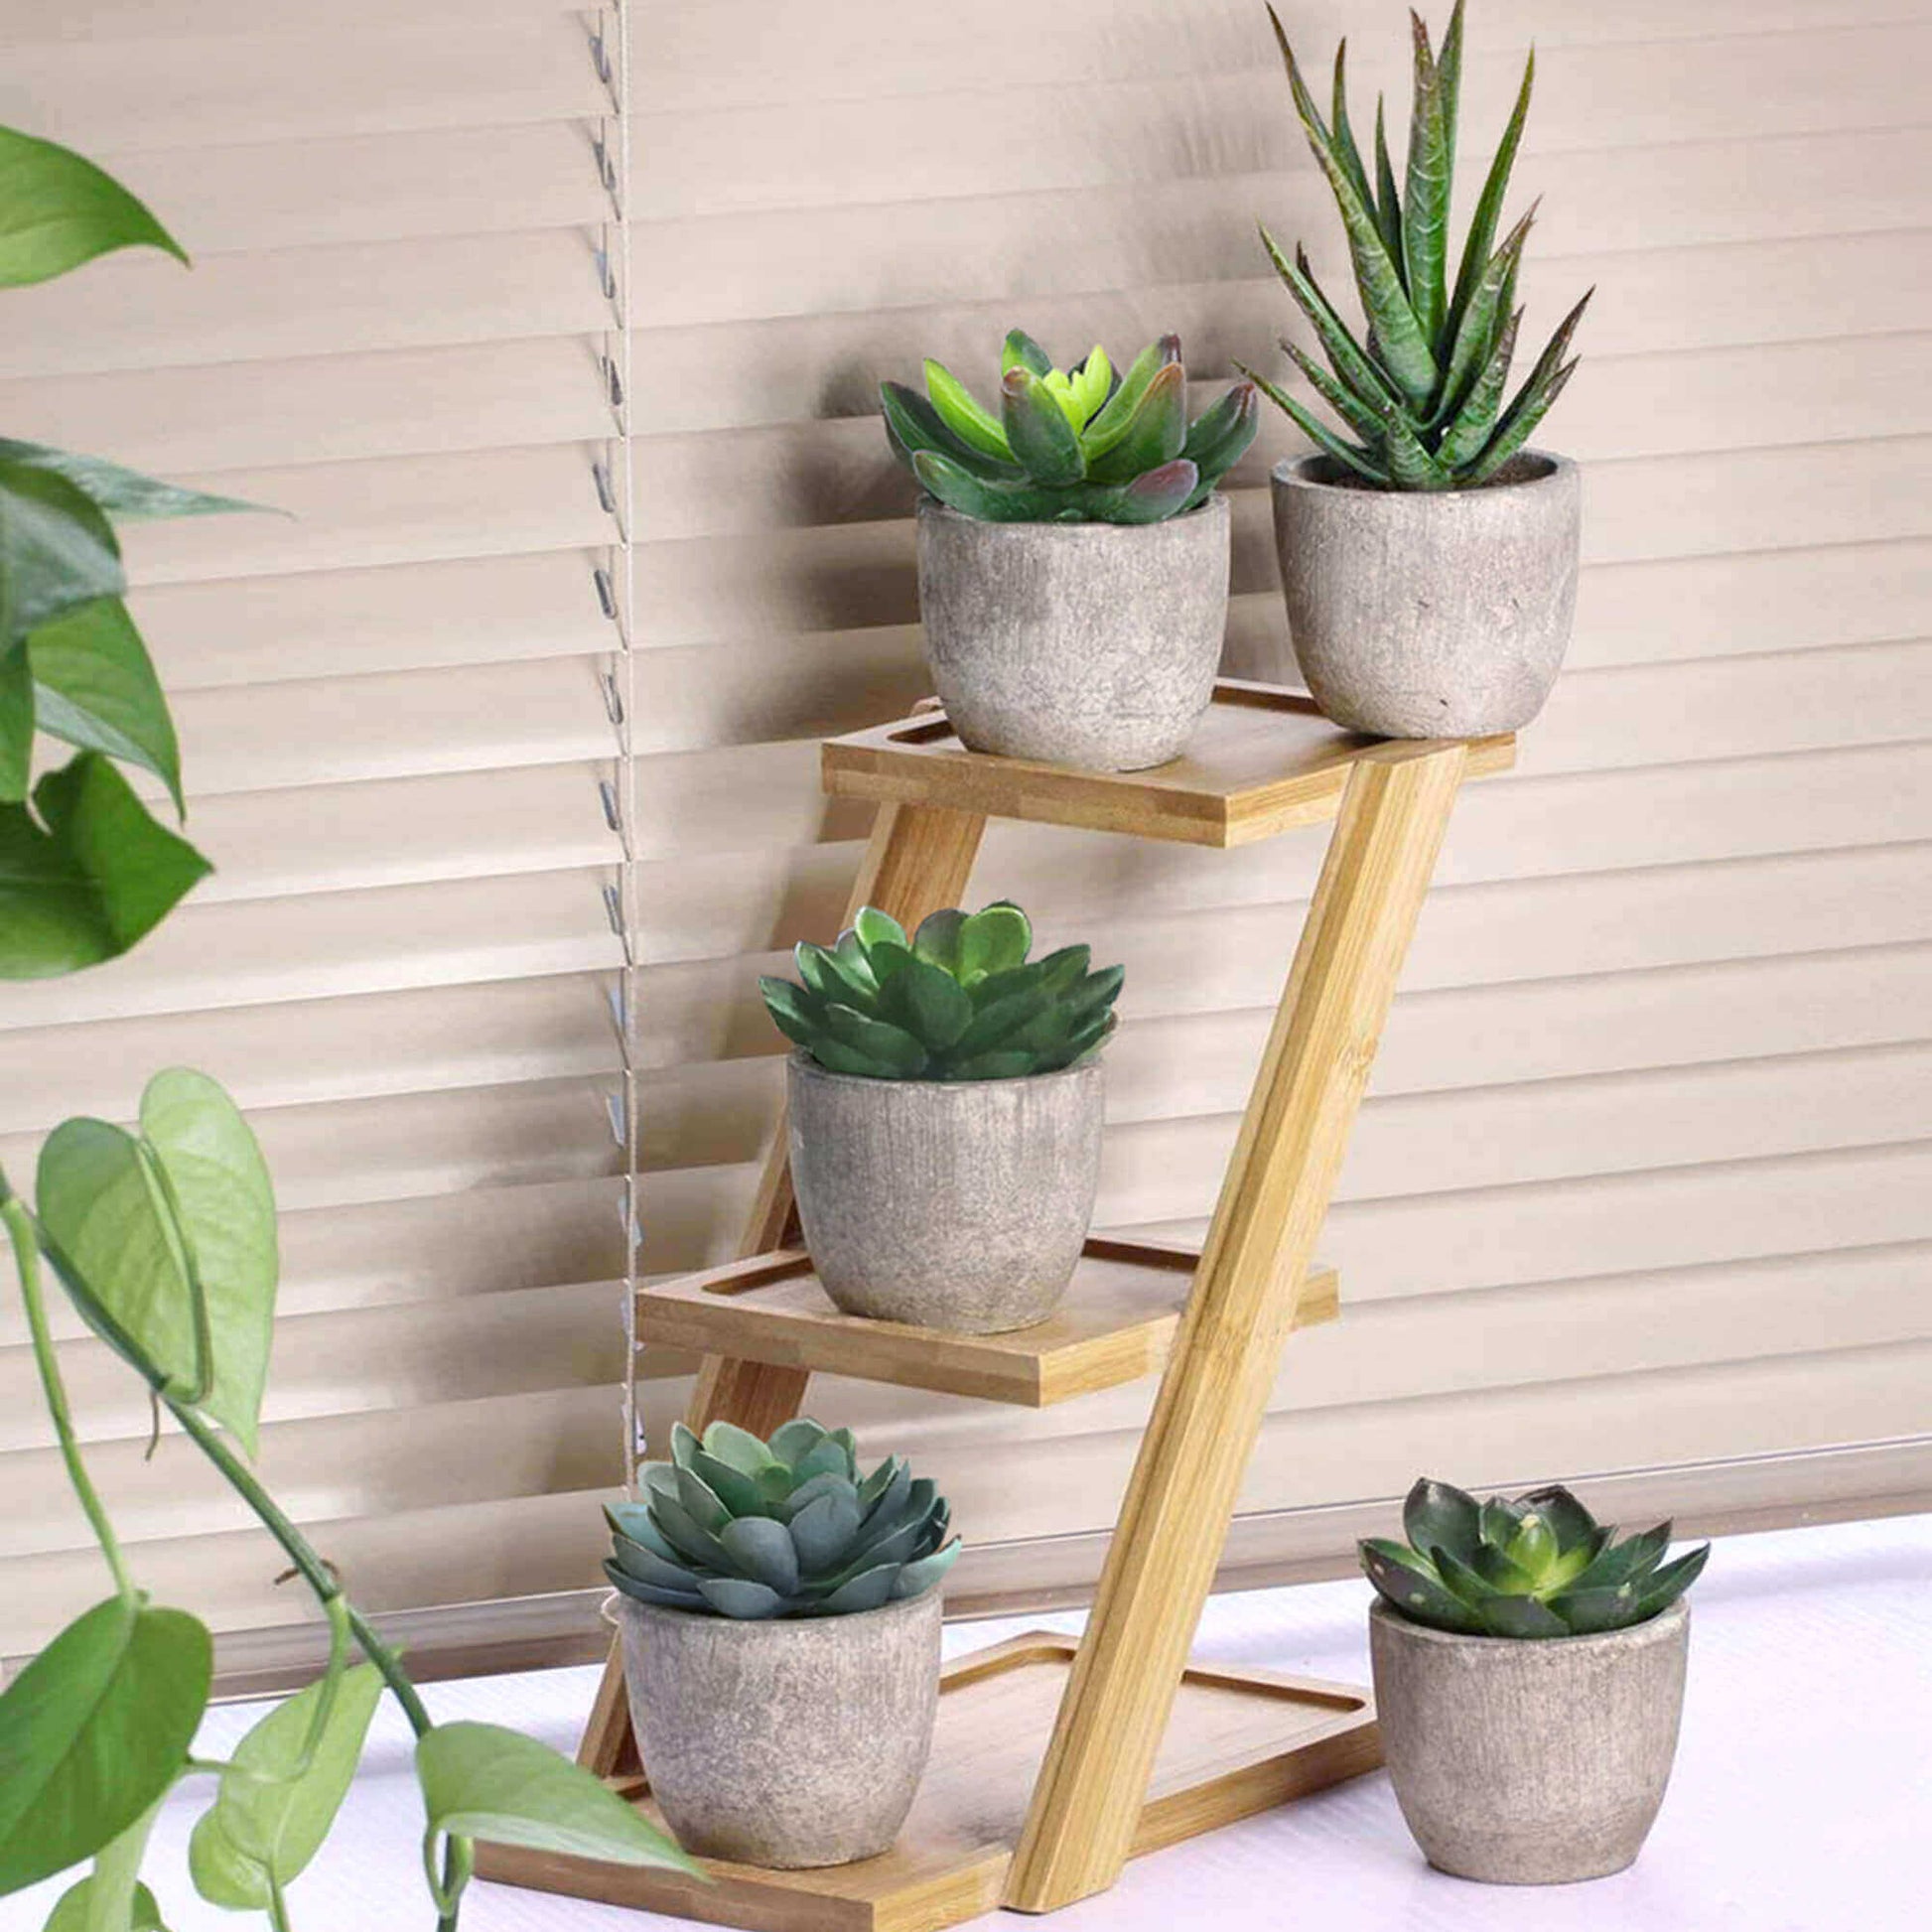 Arttoreal Fake Plants Artificial Succulent Plants/Faux Succulent Potted Cactus Plants with Gray Pots for Home Decor Set of 5